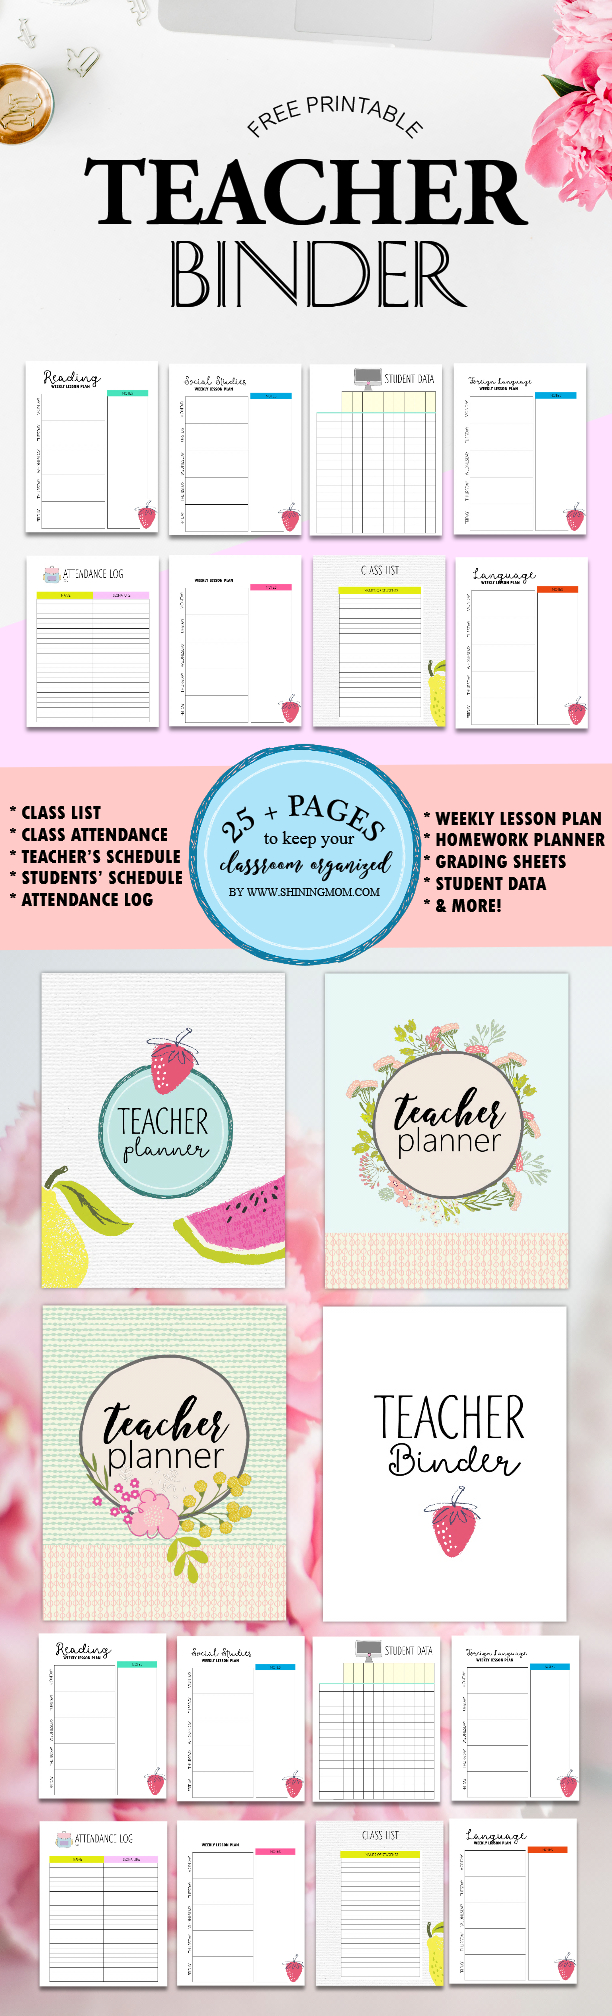 Free Teacher Binder Printables: Over 25 Pretty Planning Templates! - Printable Teacher Planner Free